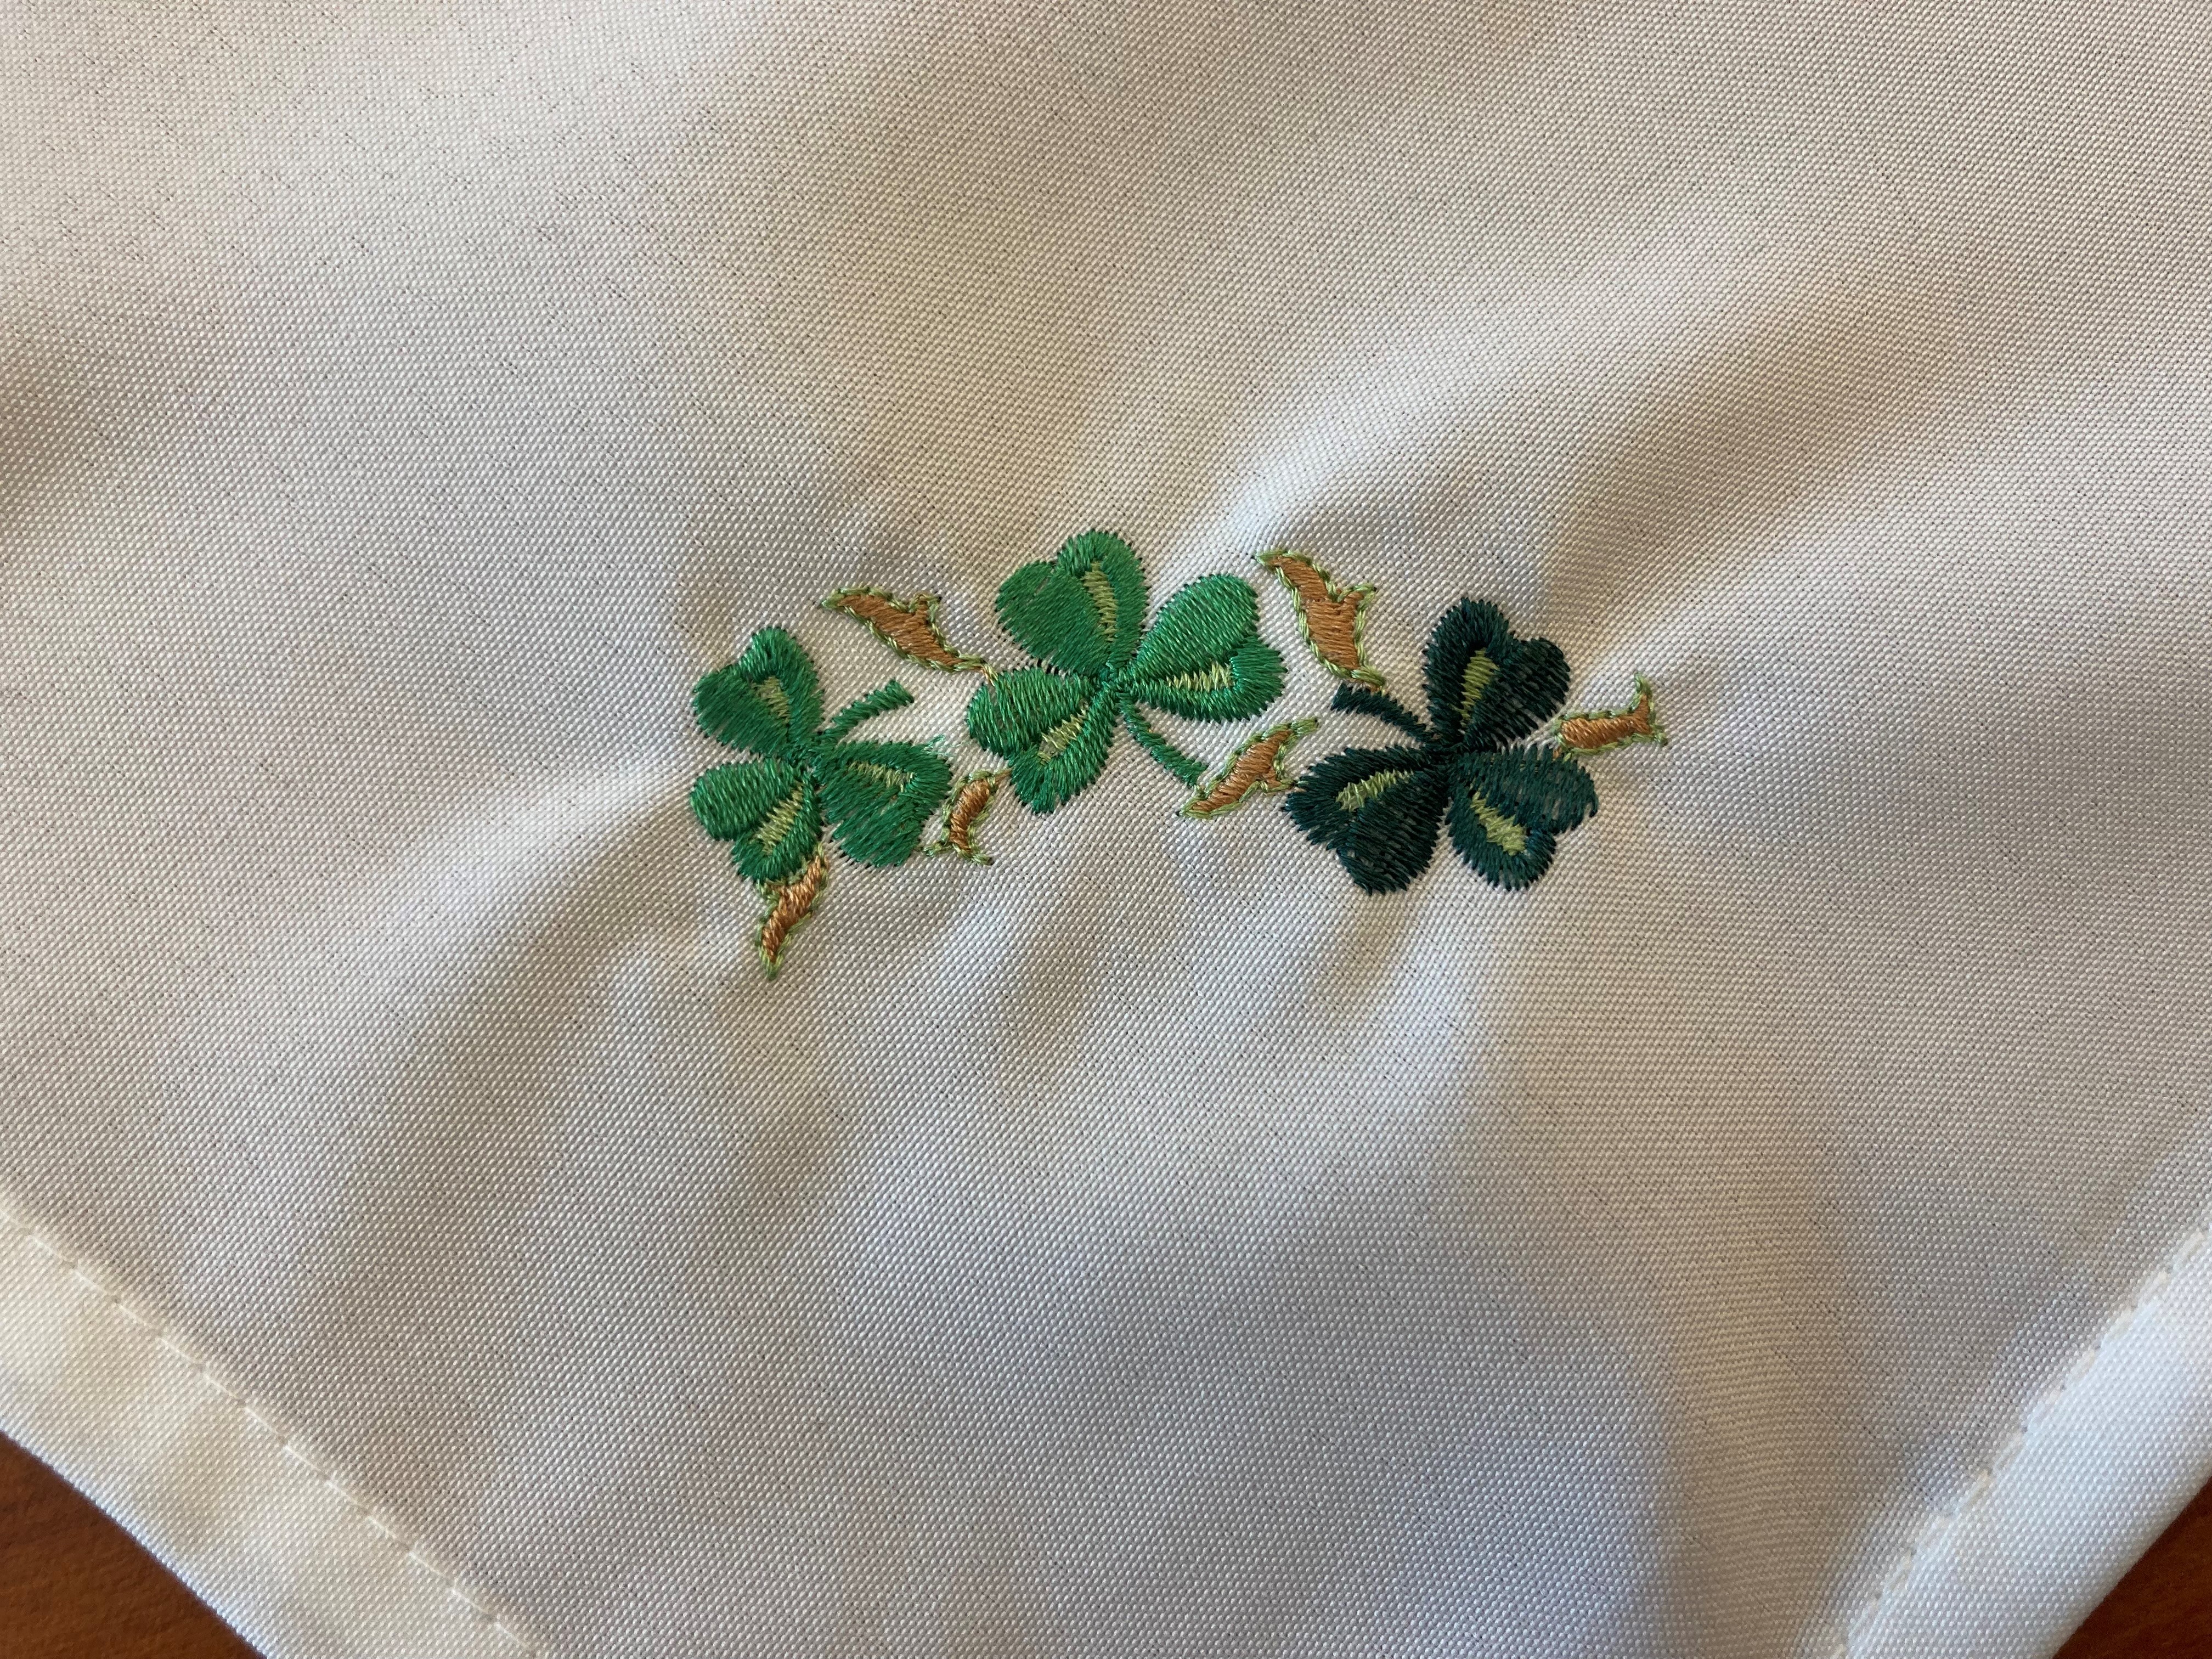 Shamrock embroidery on cloth napkin